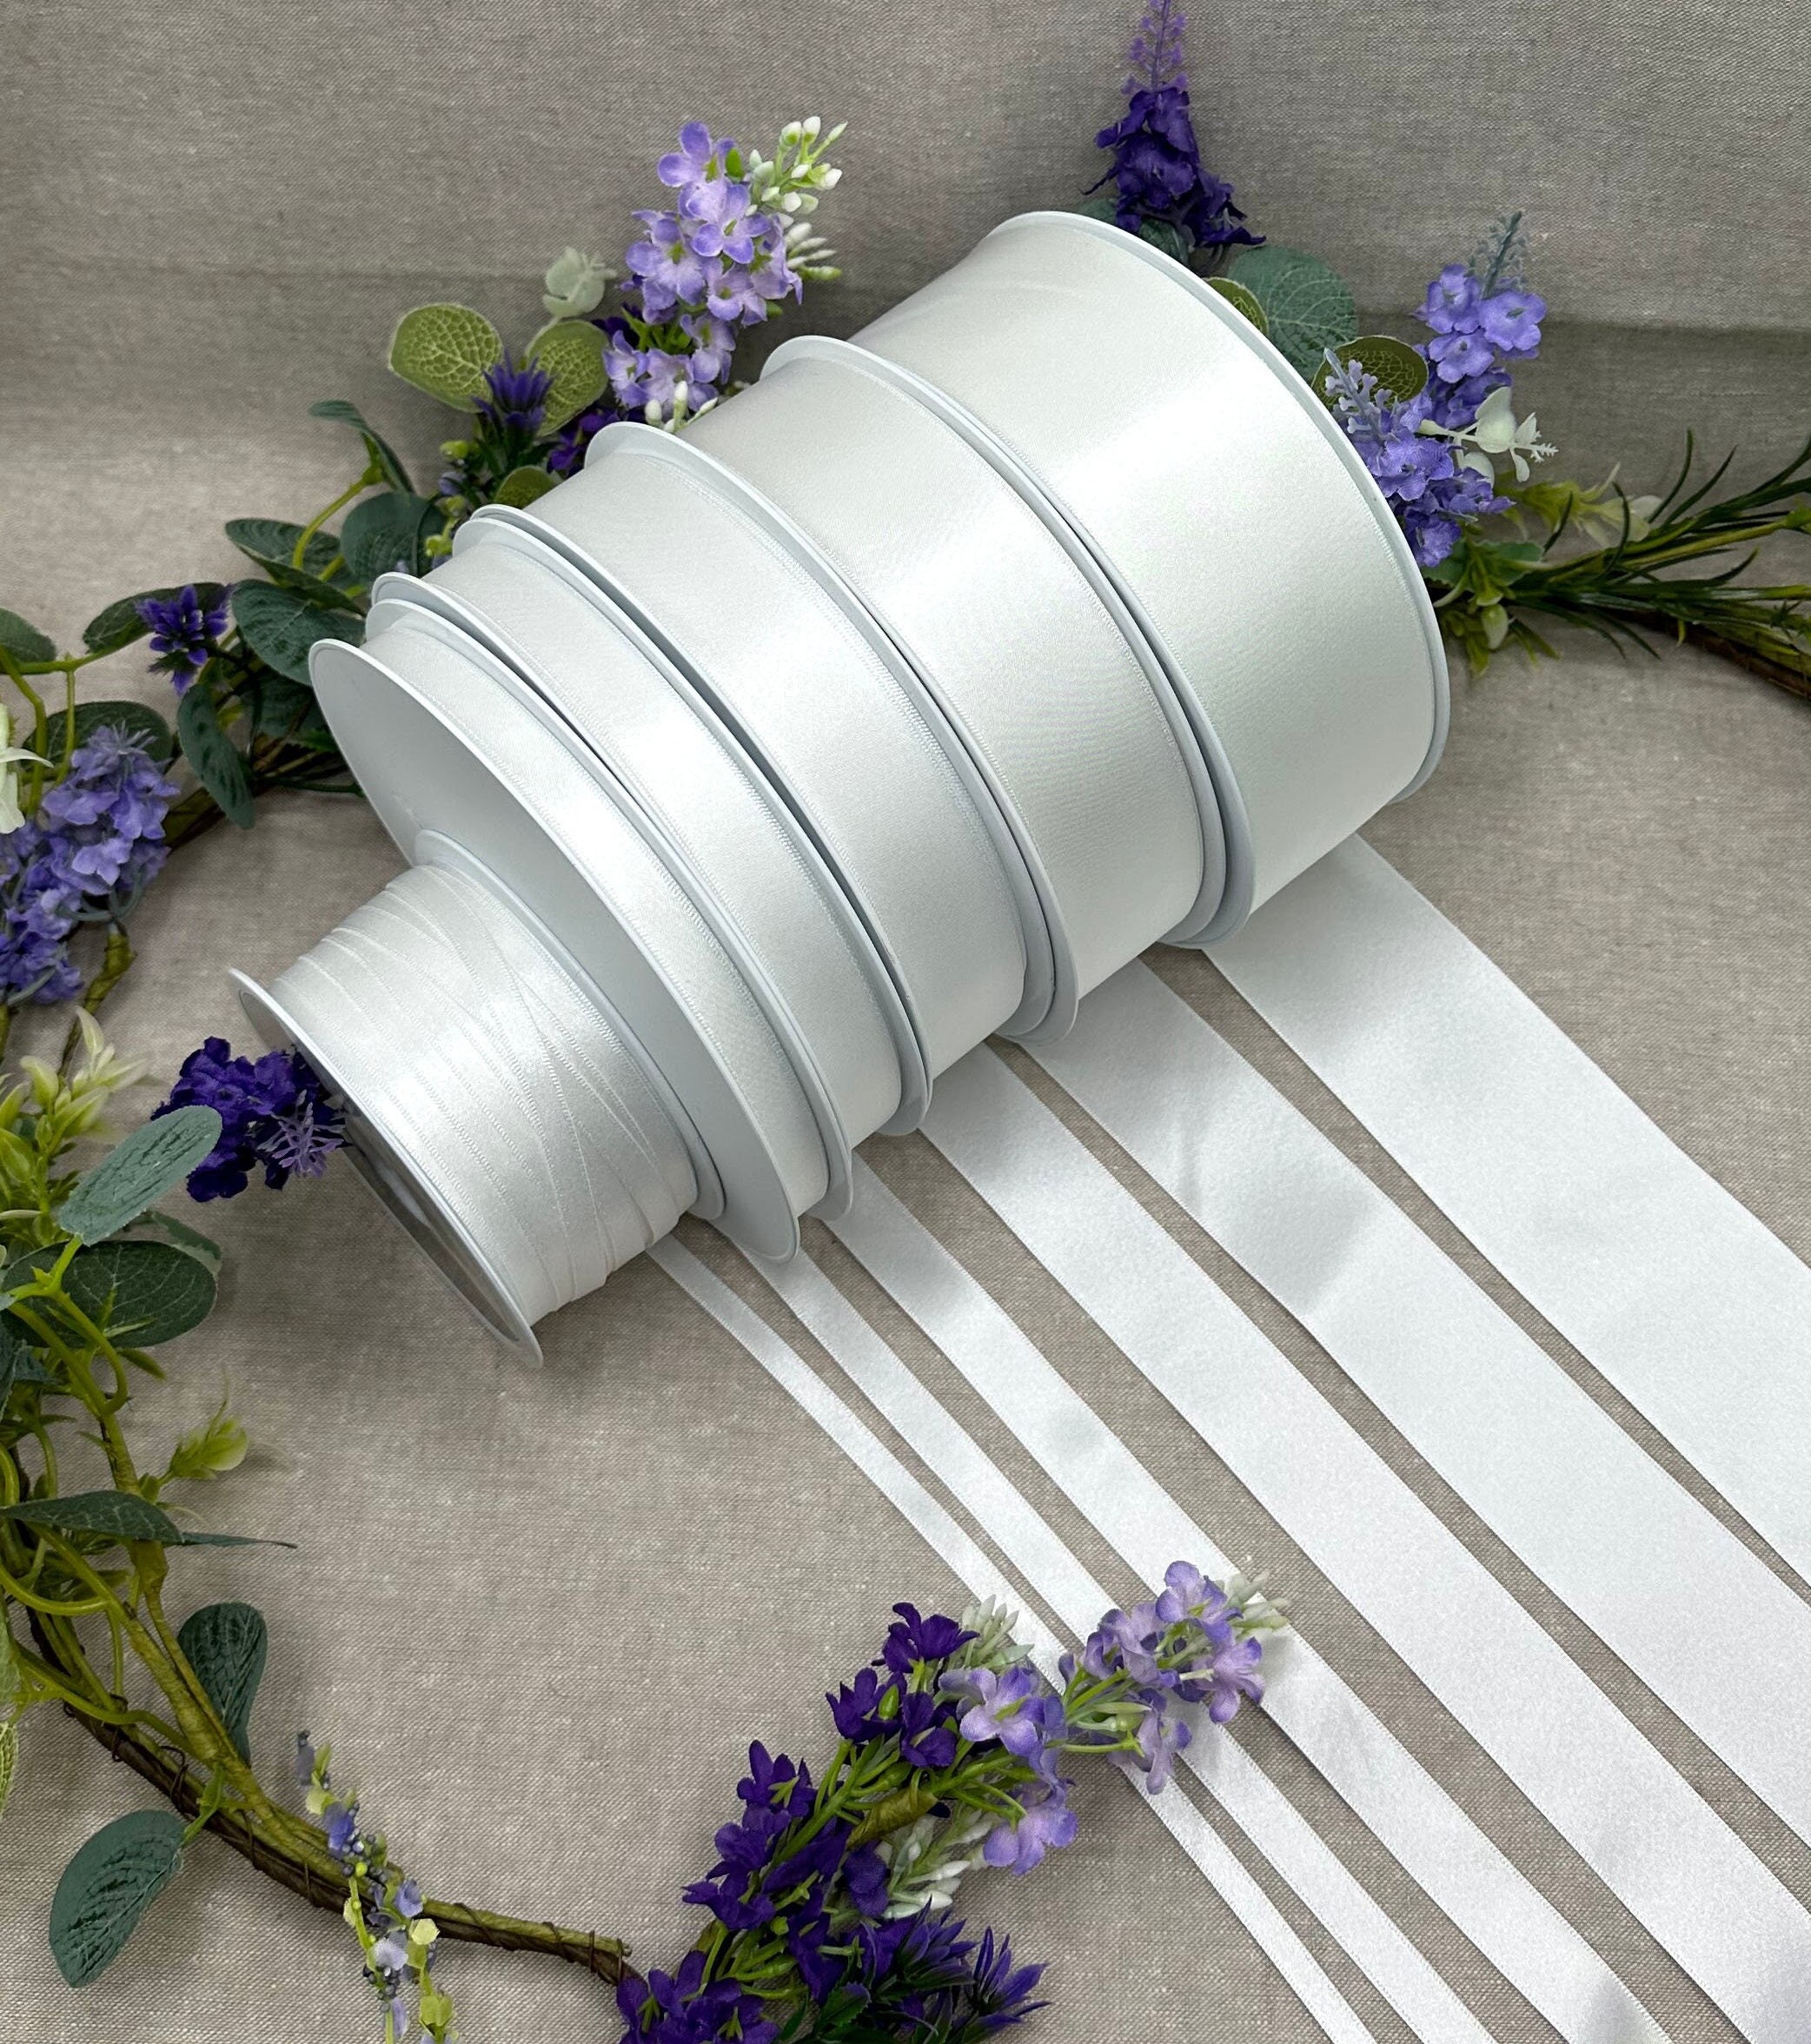 GWHOLE 6 Rolls 36 Yards Chiffon Ribbon Ivory White Ribbon Fringe Handmade  for Wedding Invitations Bridal Shower Bouquets Decorations, Gifts Wrapping